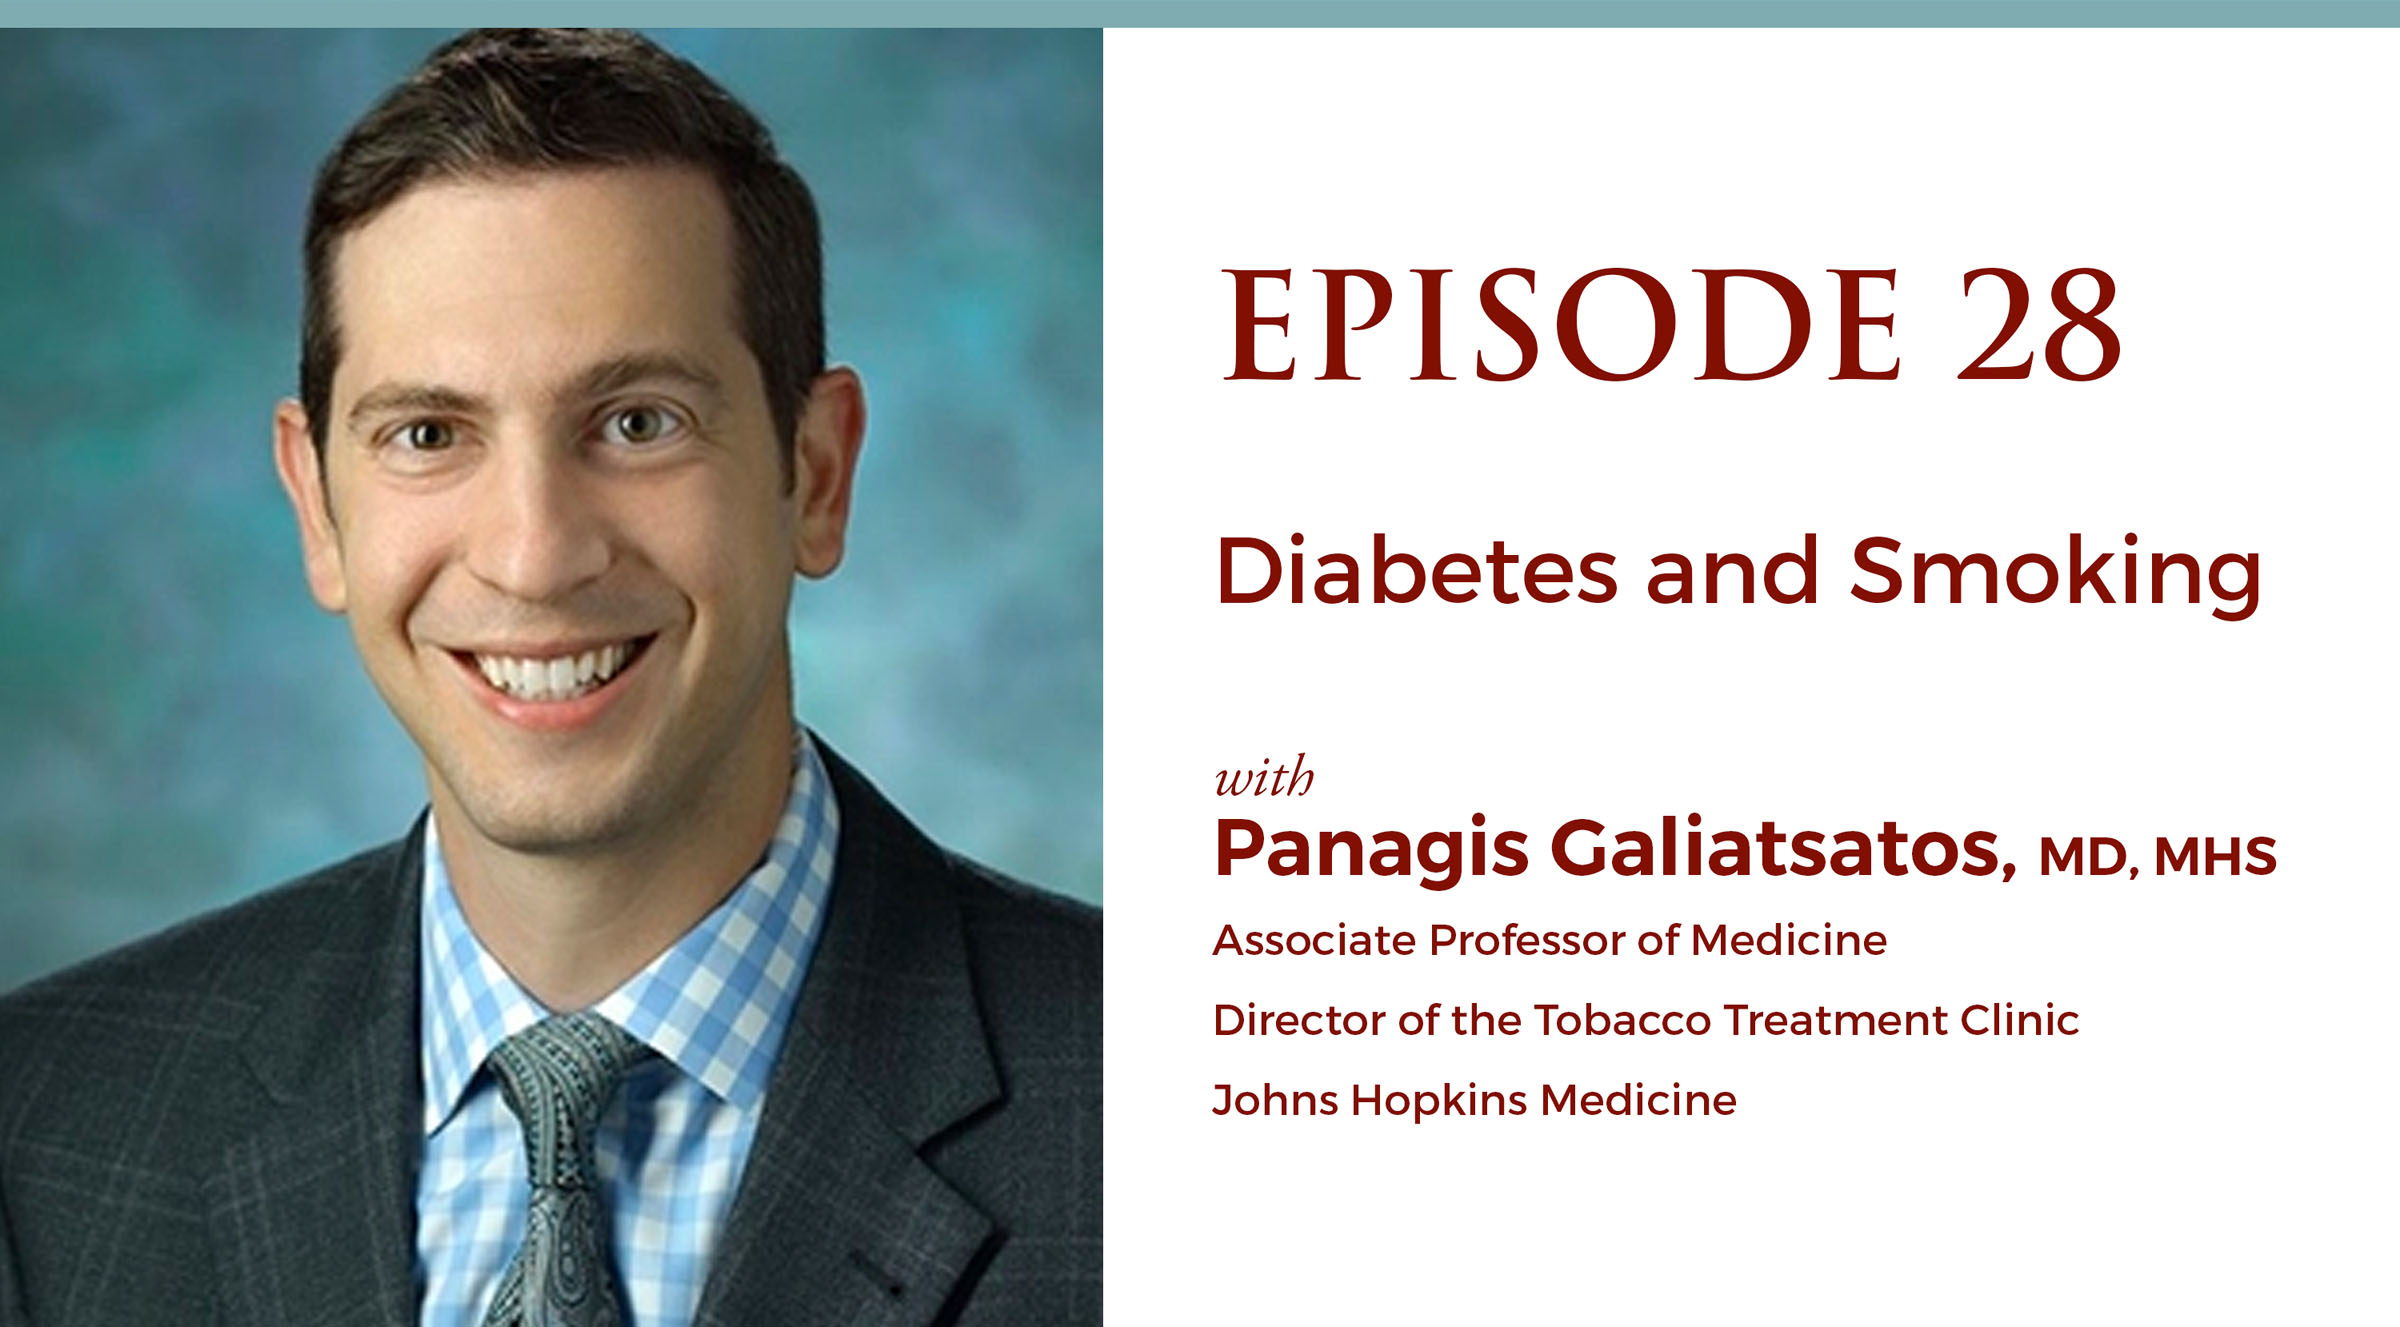 Episode 28: Diabetes and Smoking